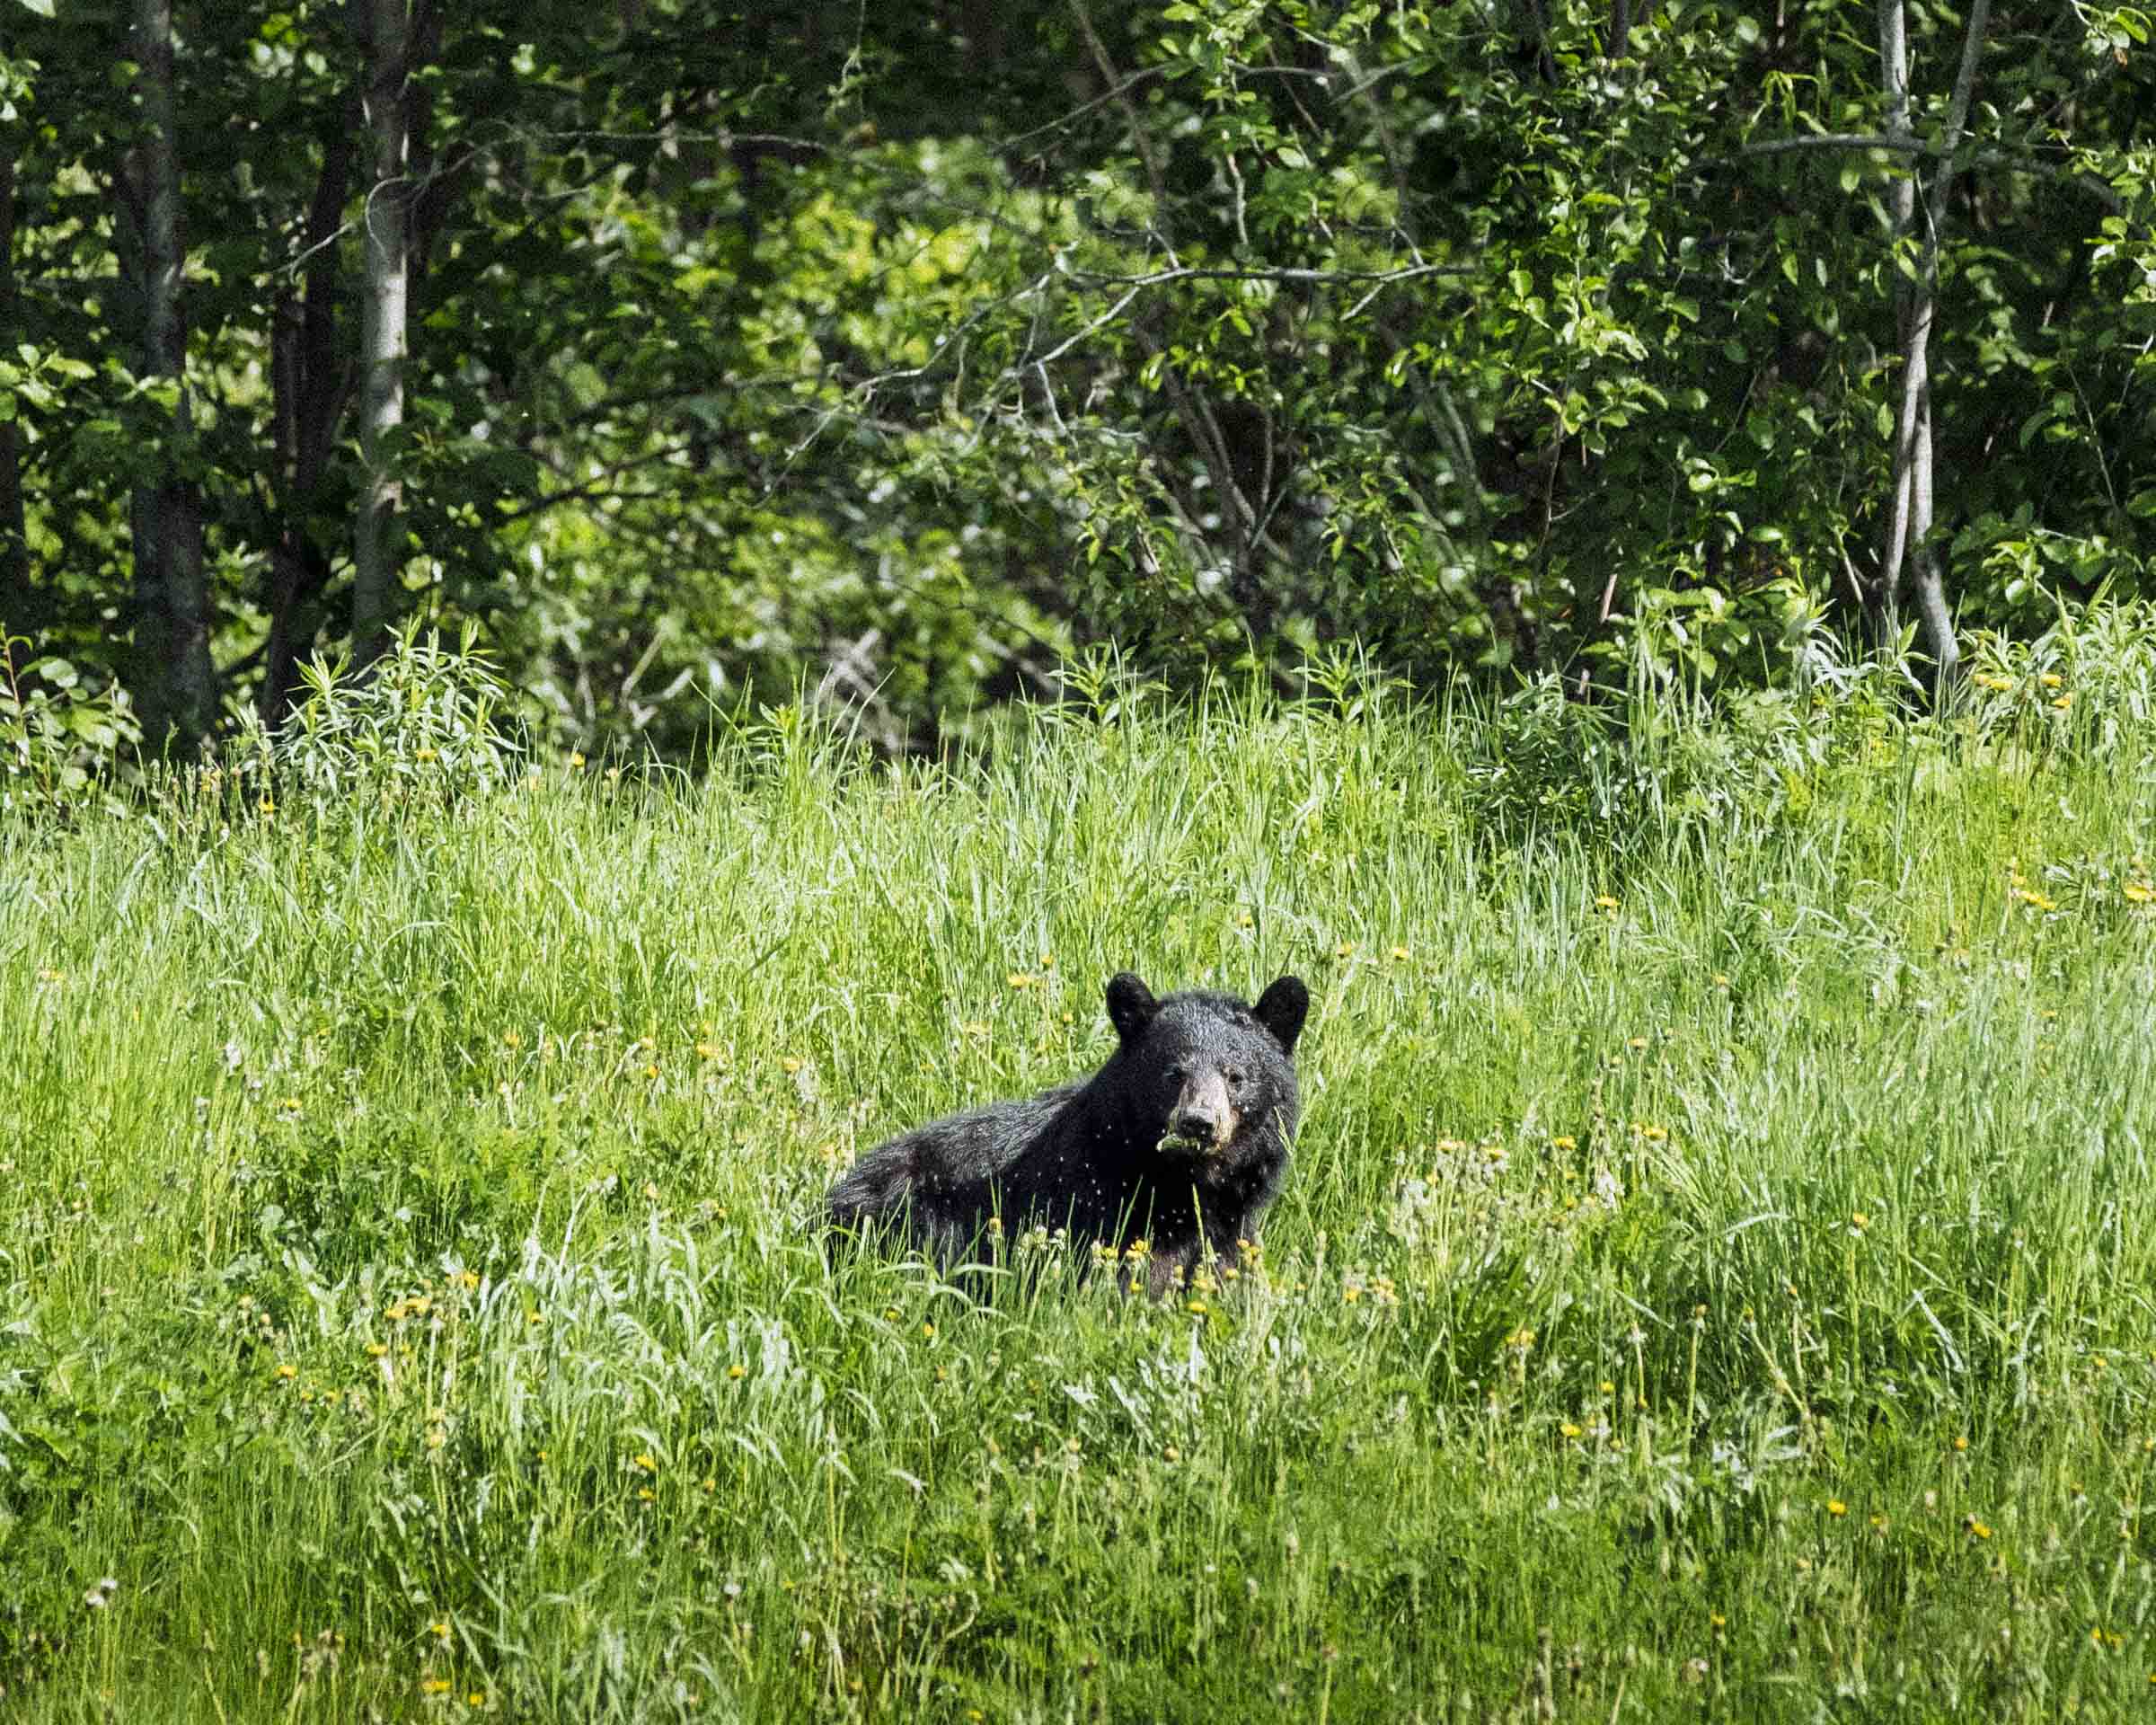 Bear eating dandelion greens in Northern BC